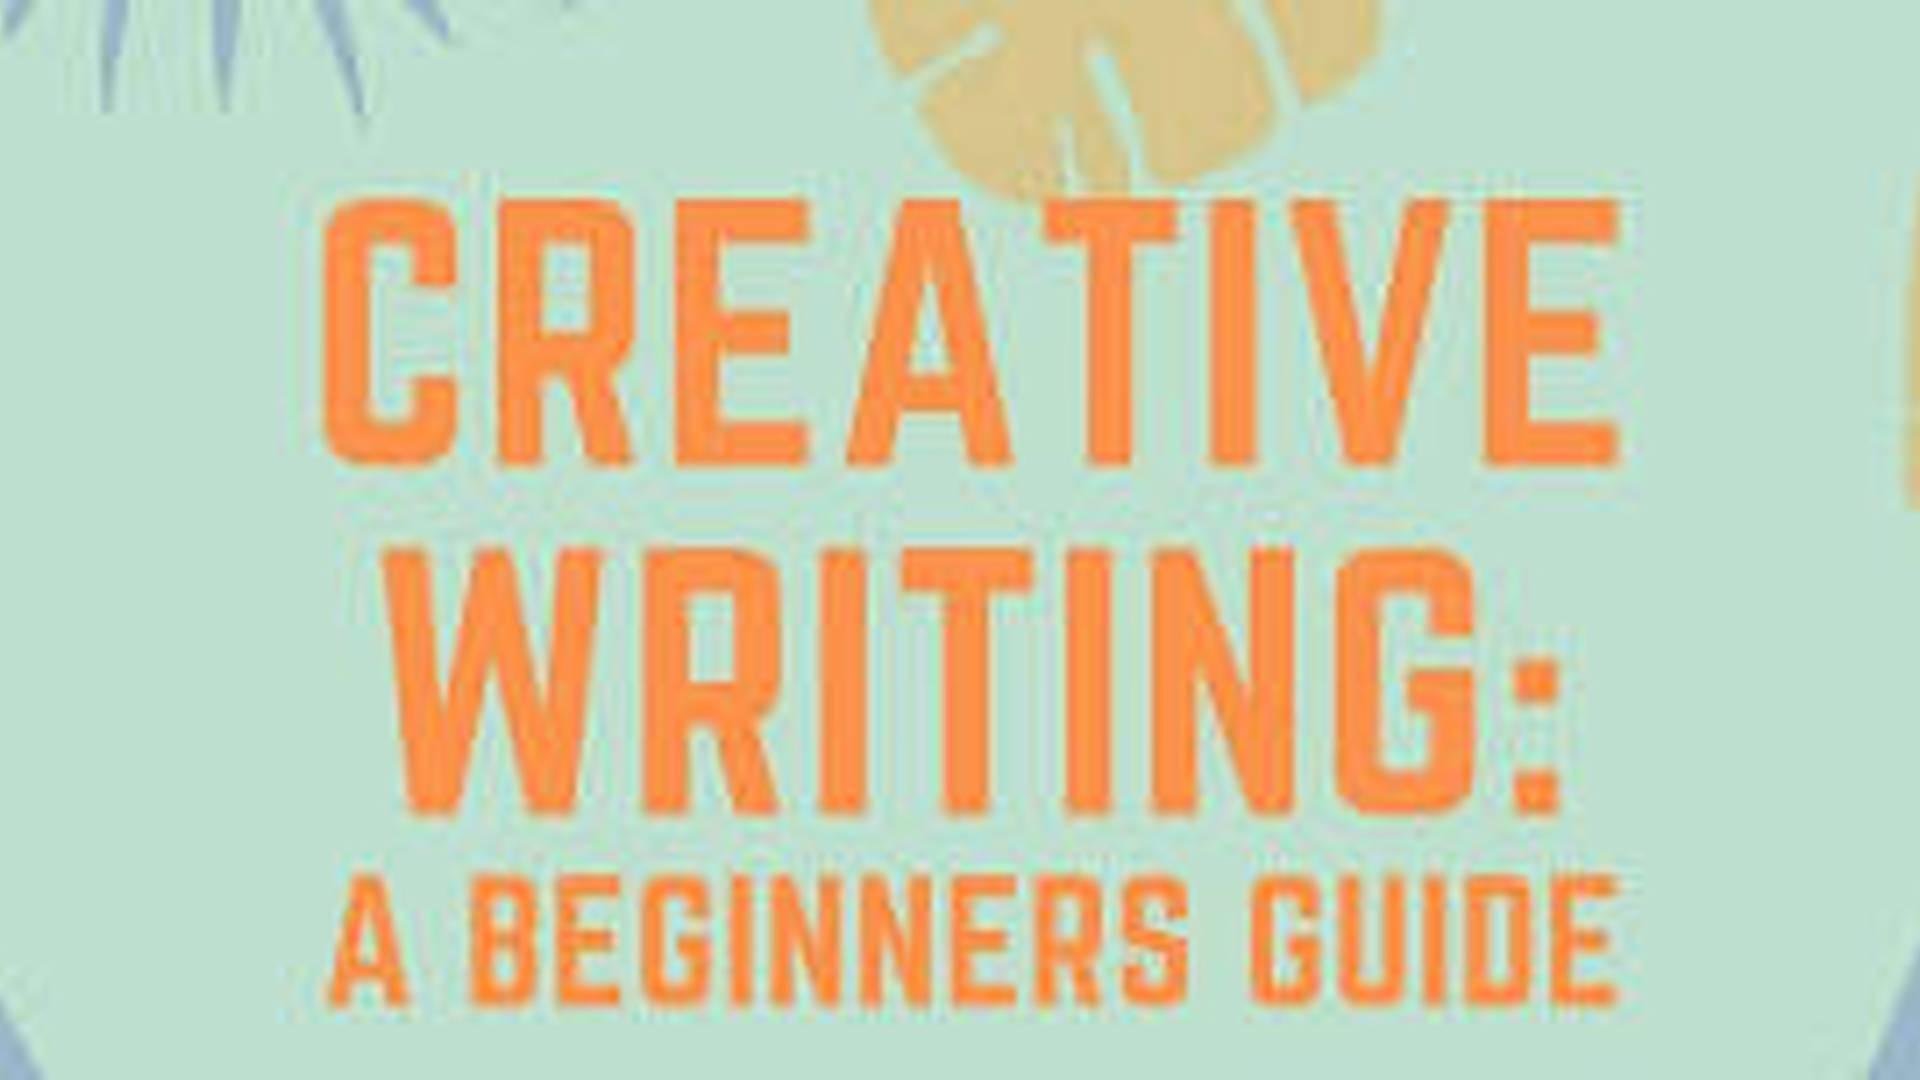 Creative Writing: A Beginner's Guide (7-13) photo